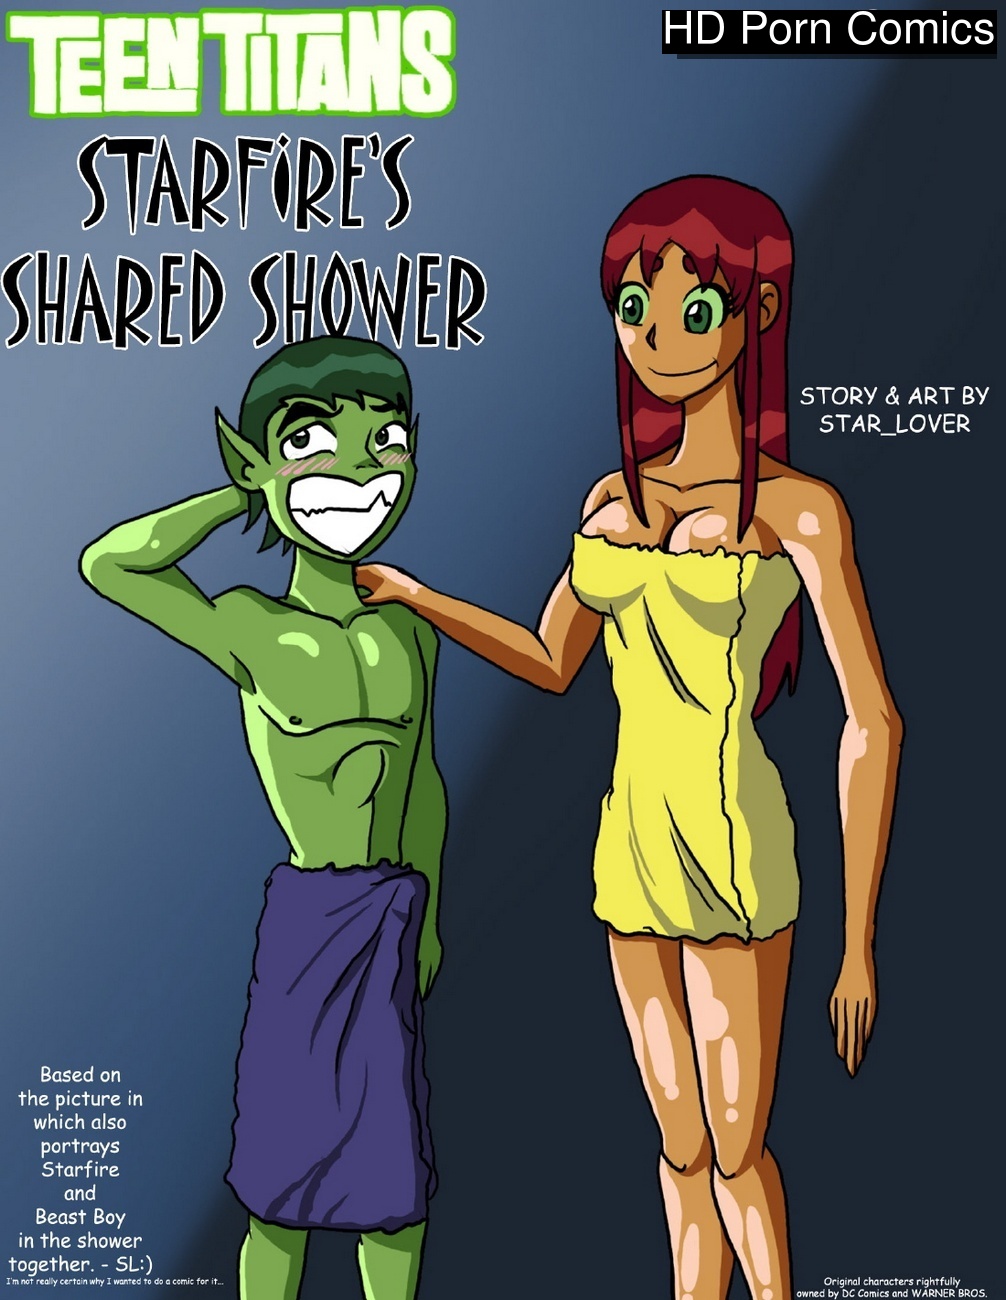 Starfire S Shared Shower Sex Comic Hd Porn Comics